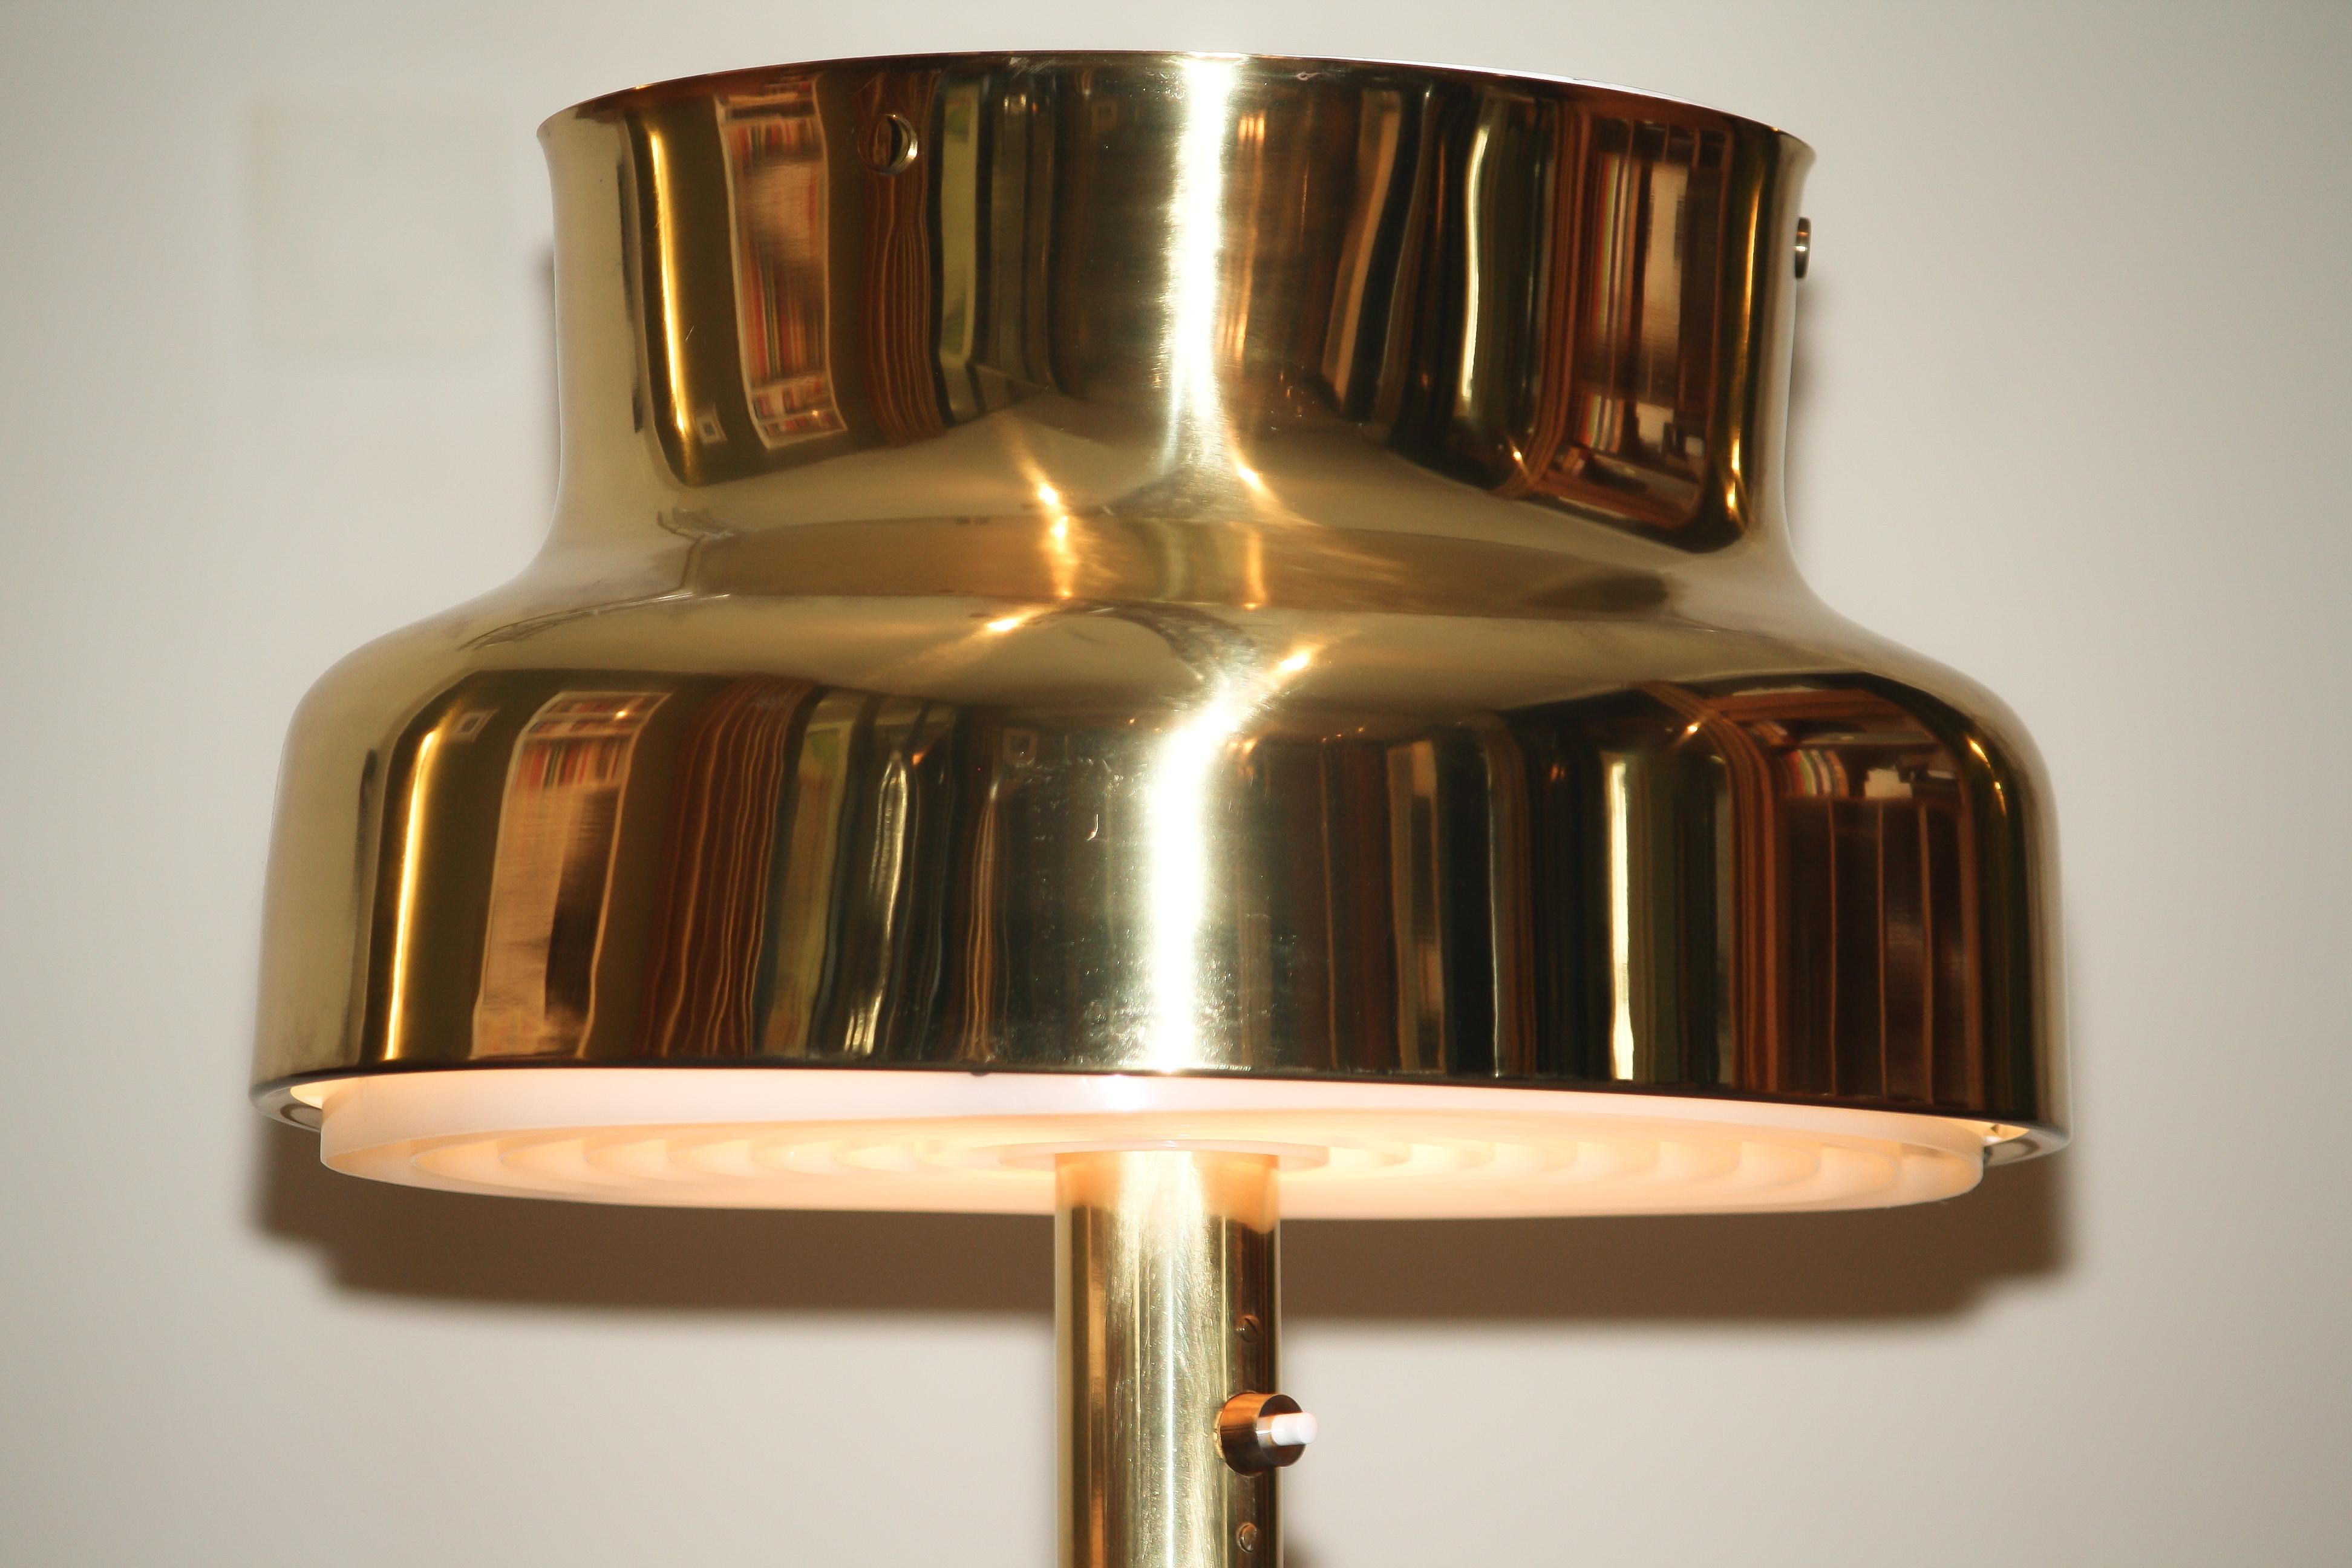 1960s Golden or Brass Floor Lamp by Anders Pehrson ‘Bumling’ for Ateljé Lyktan (Schwedisch)